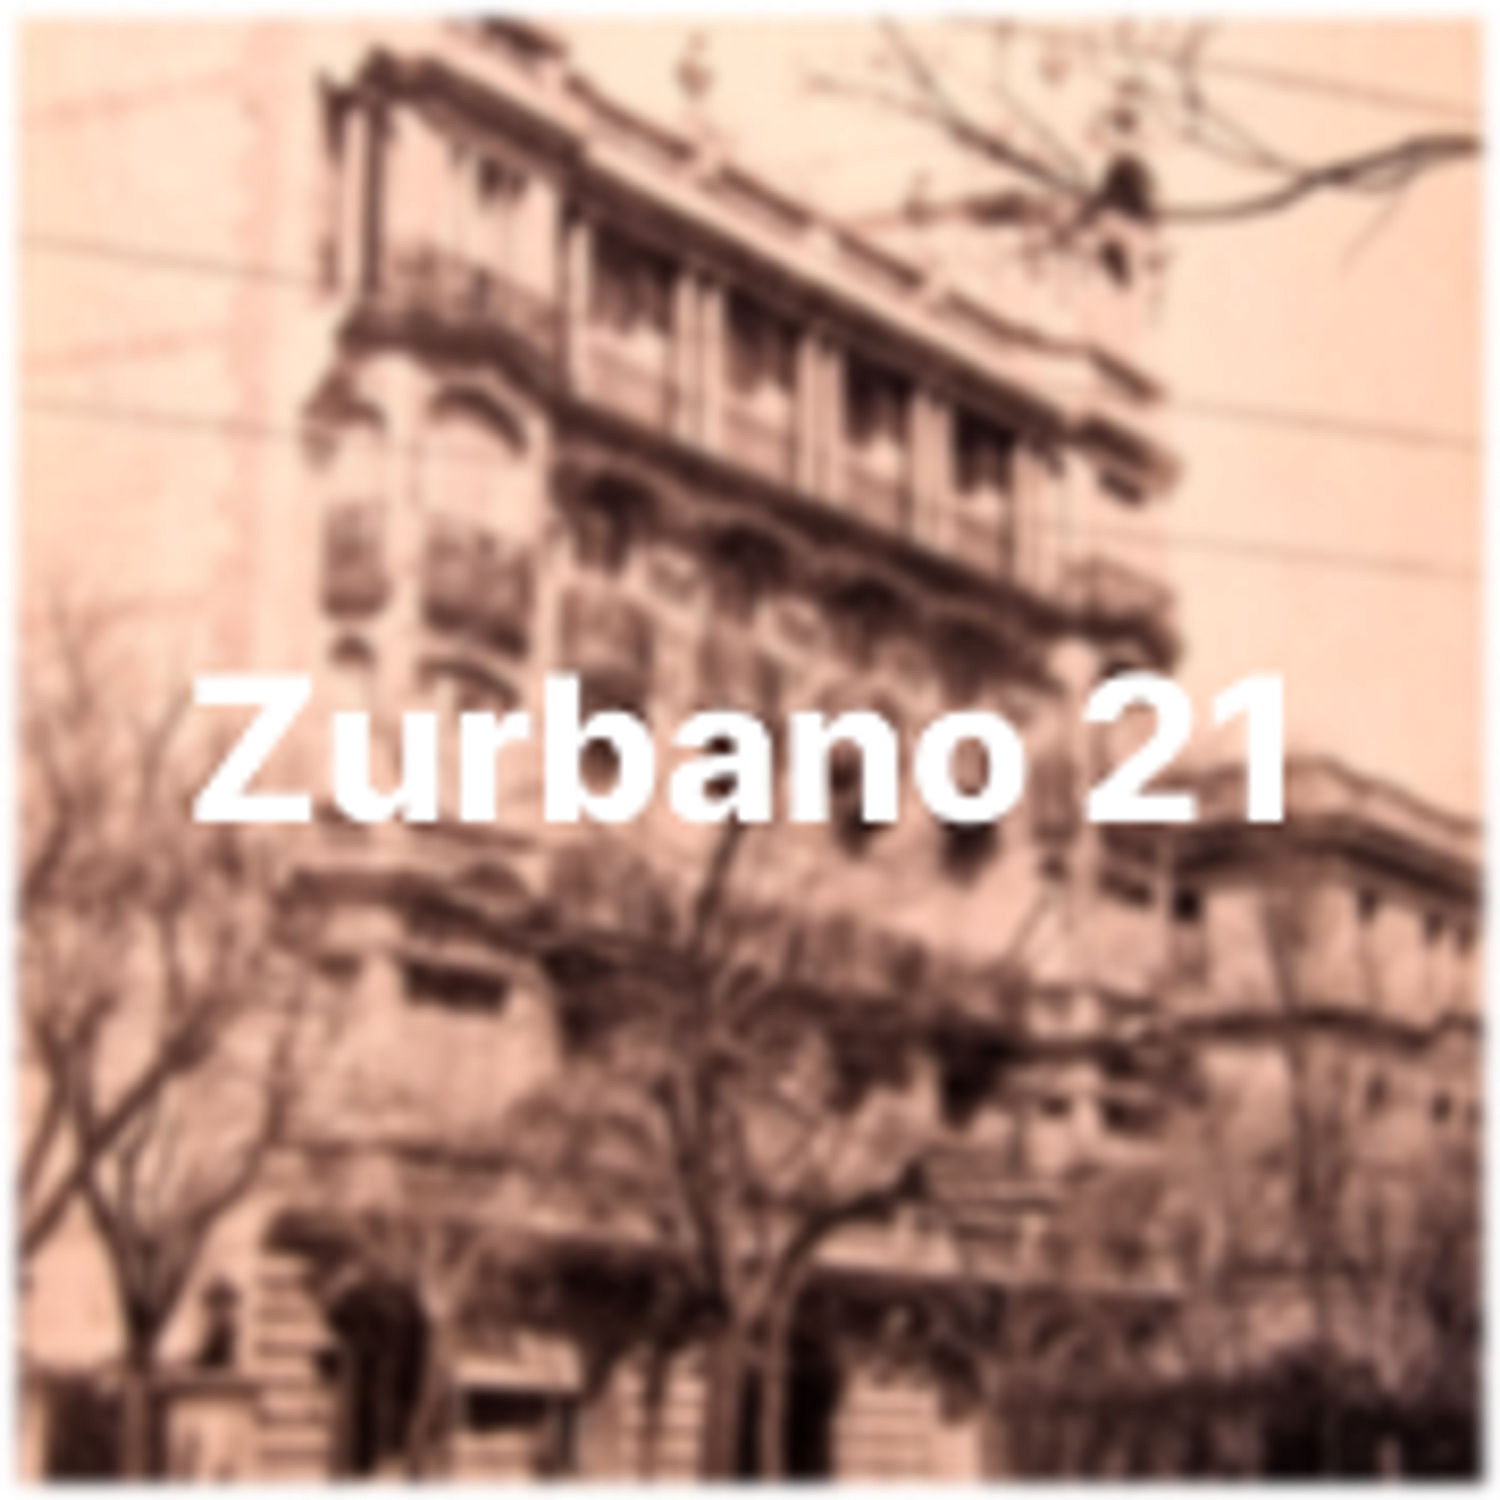 Zurbano 21